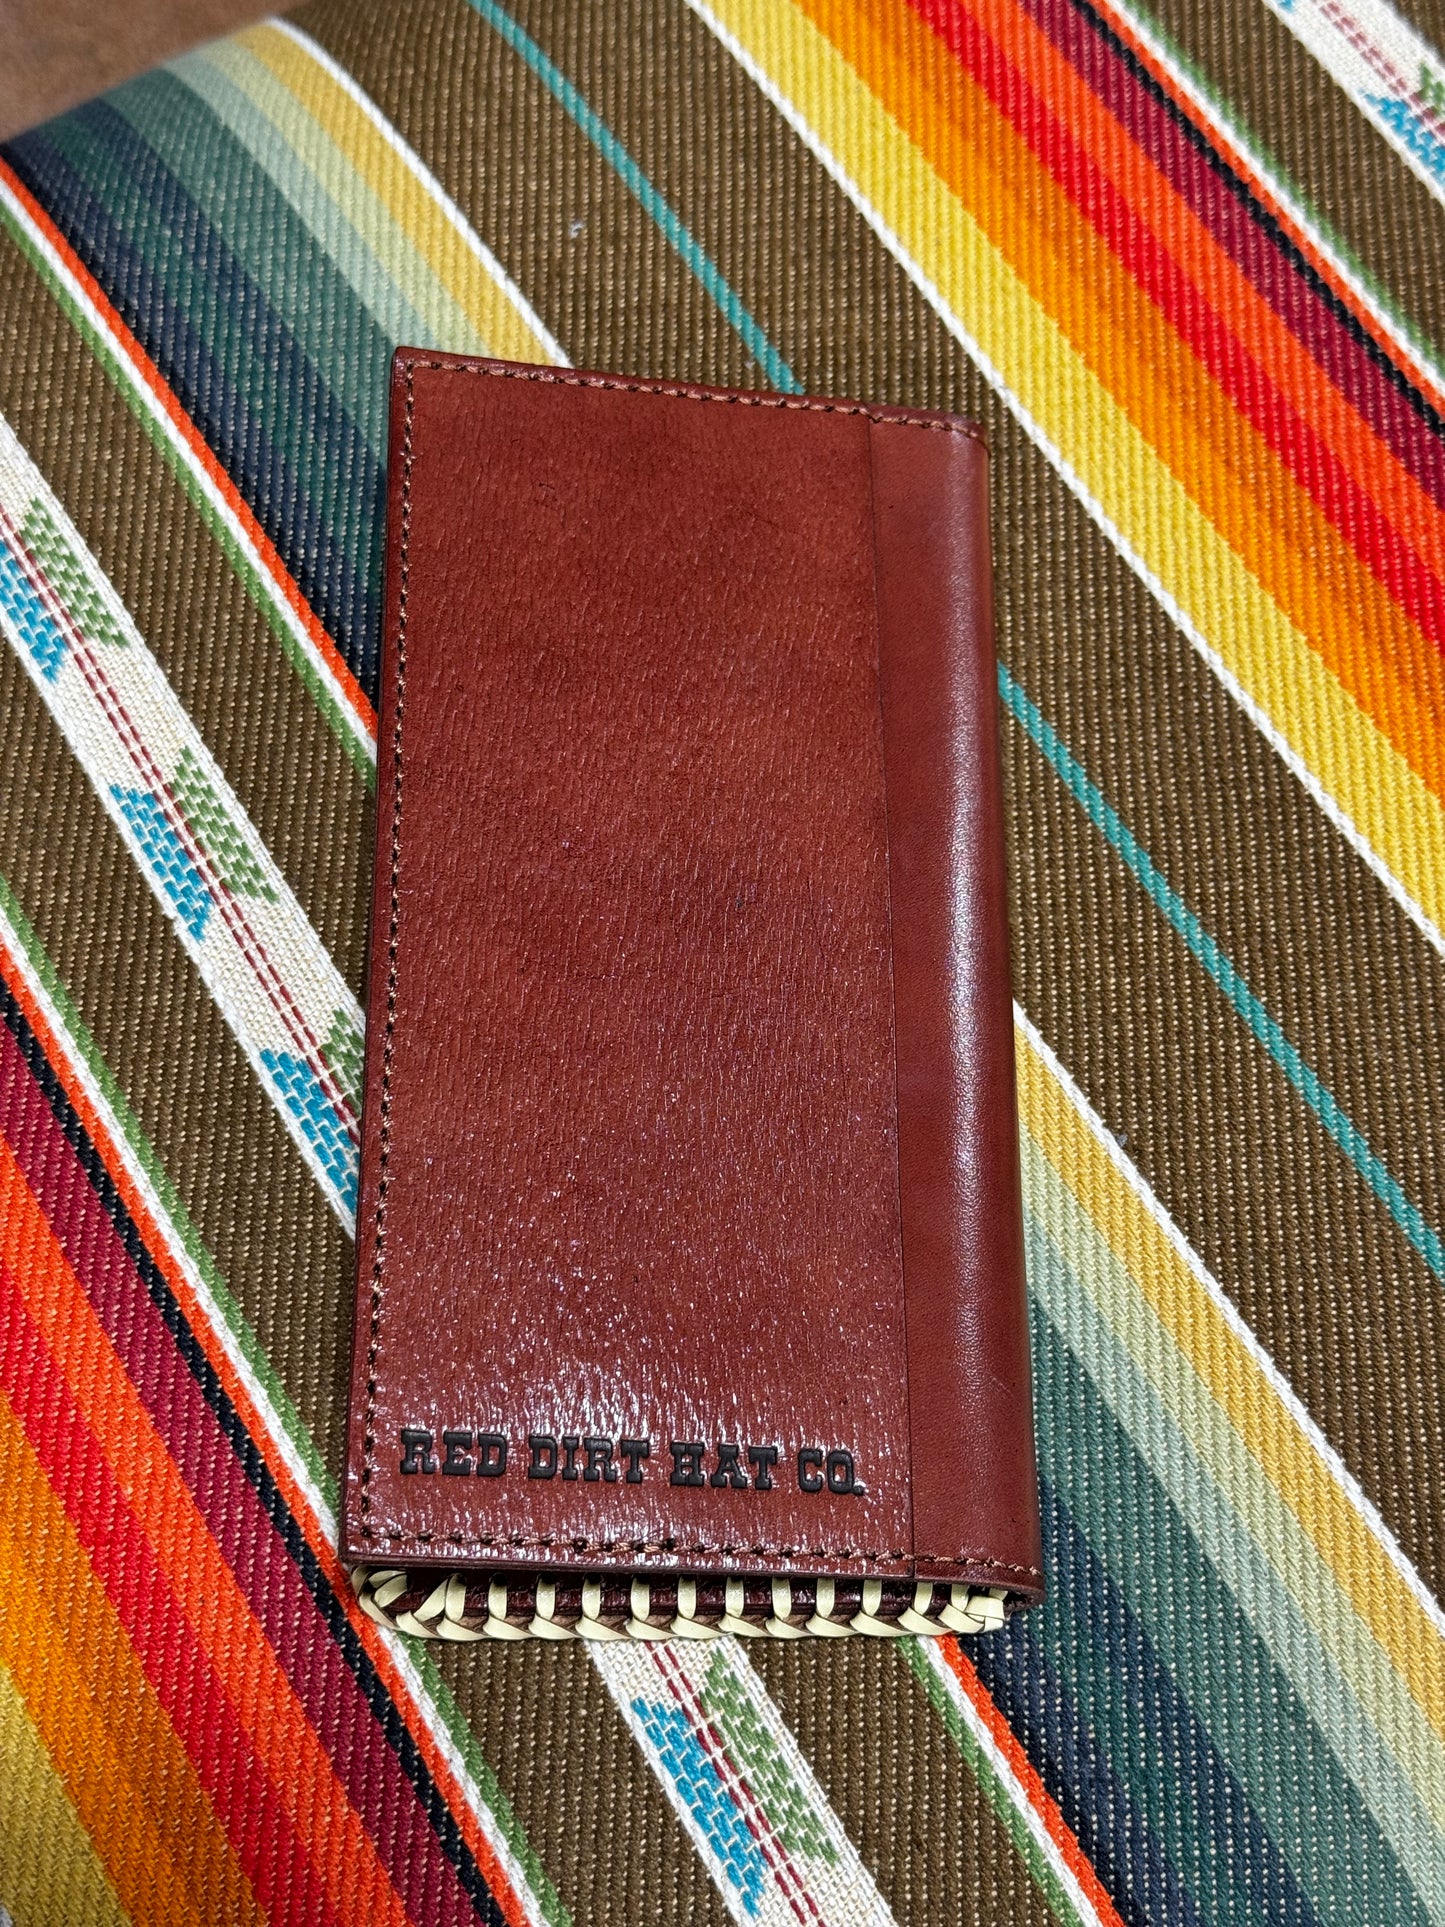 Red Dirt Hat Blue Aztec Buck Stitch Rodeo Wallet (76W4)